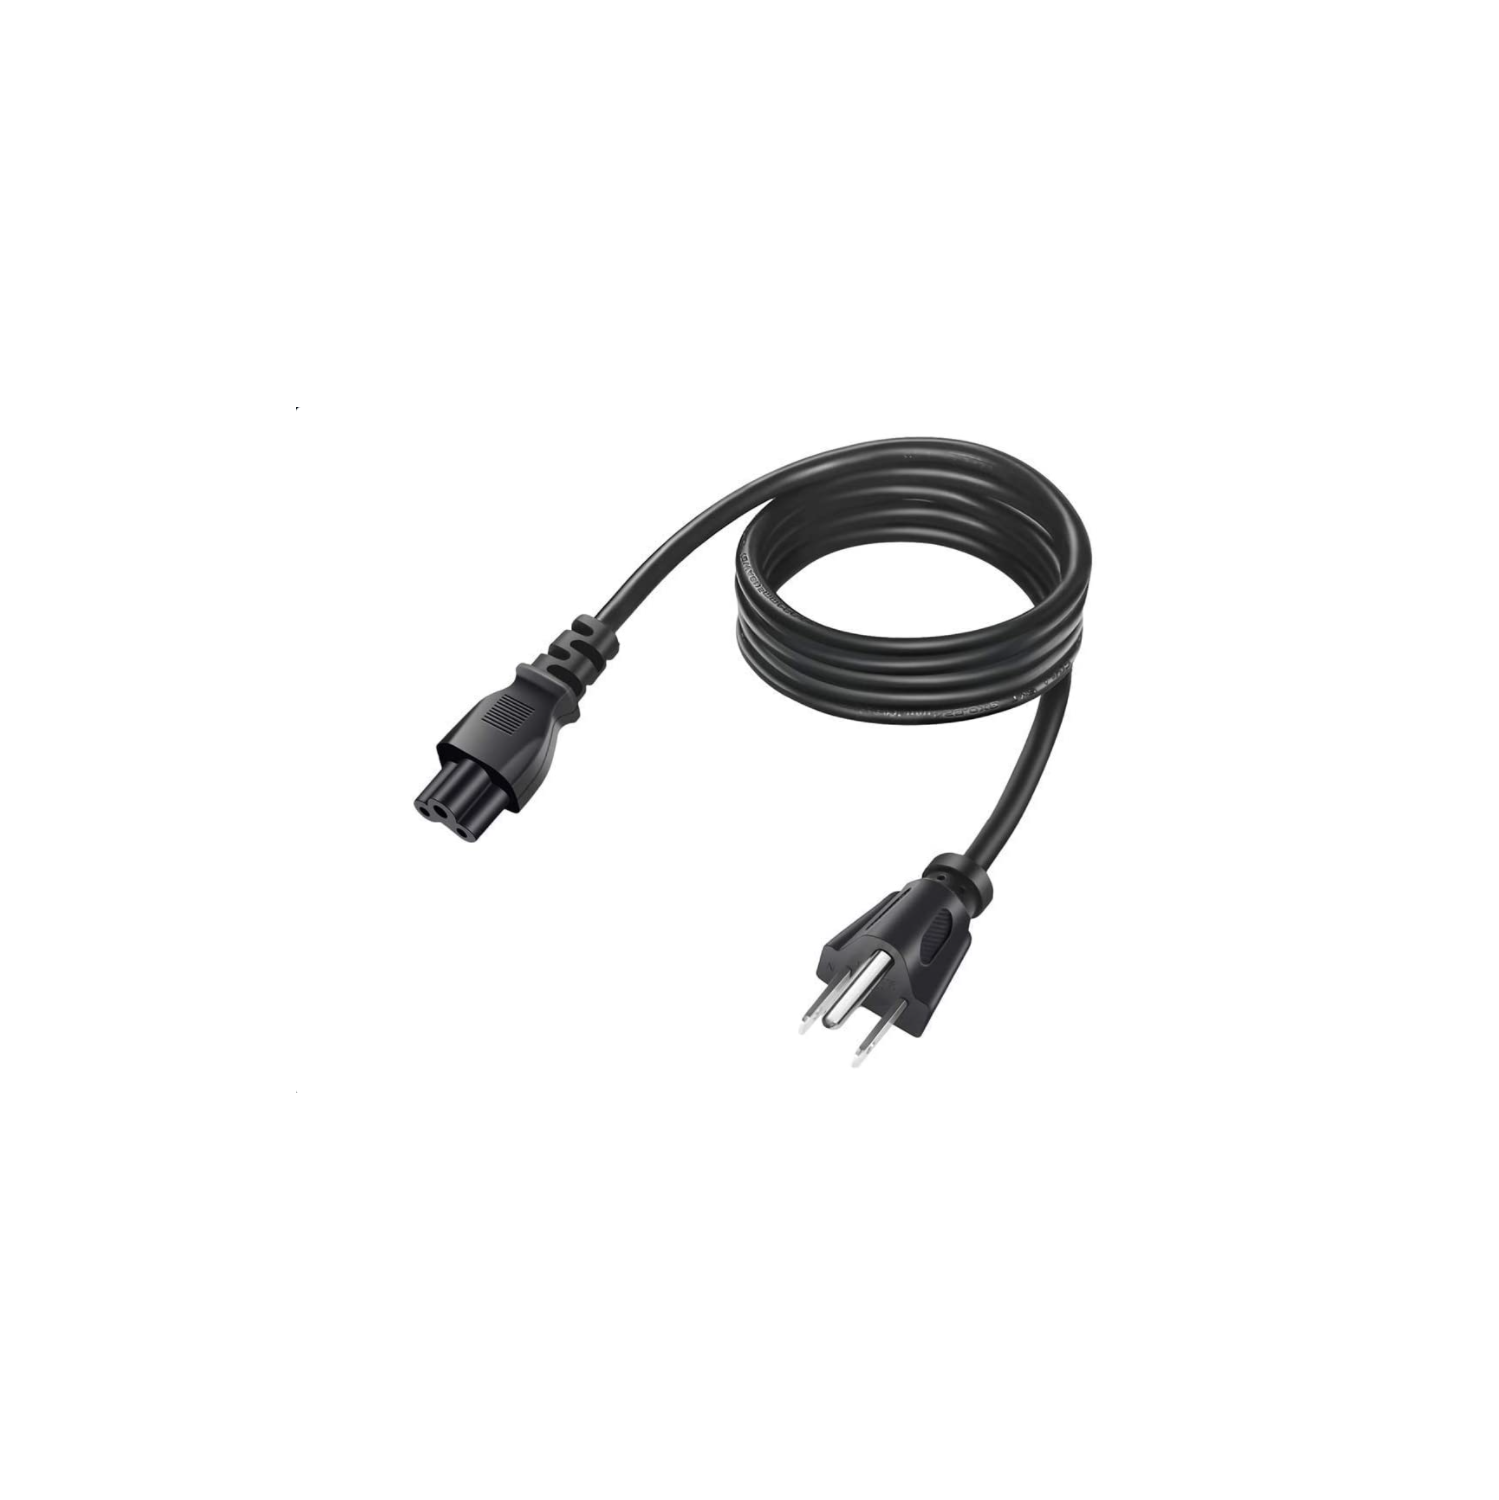 3 Prong AC Laptop Power Cord Cable Fit for LG Asus Acer Dell Samsung HP Sony Lenovo ThinkPad IdeaPad Chromebook Yoga: IEC-60320 IEC320 C5 to NEMA 5-15P 55LB5900 42LN5300 42LN5400 42LB5600 42LN5700 47L